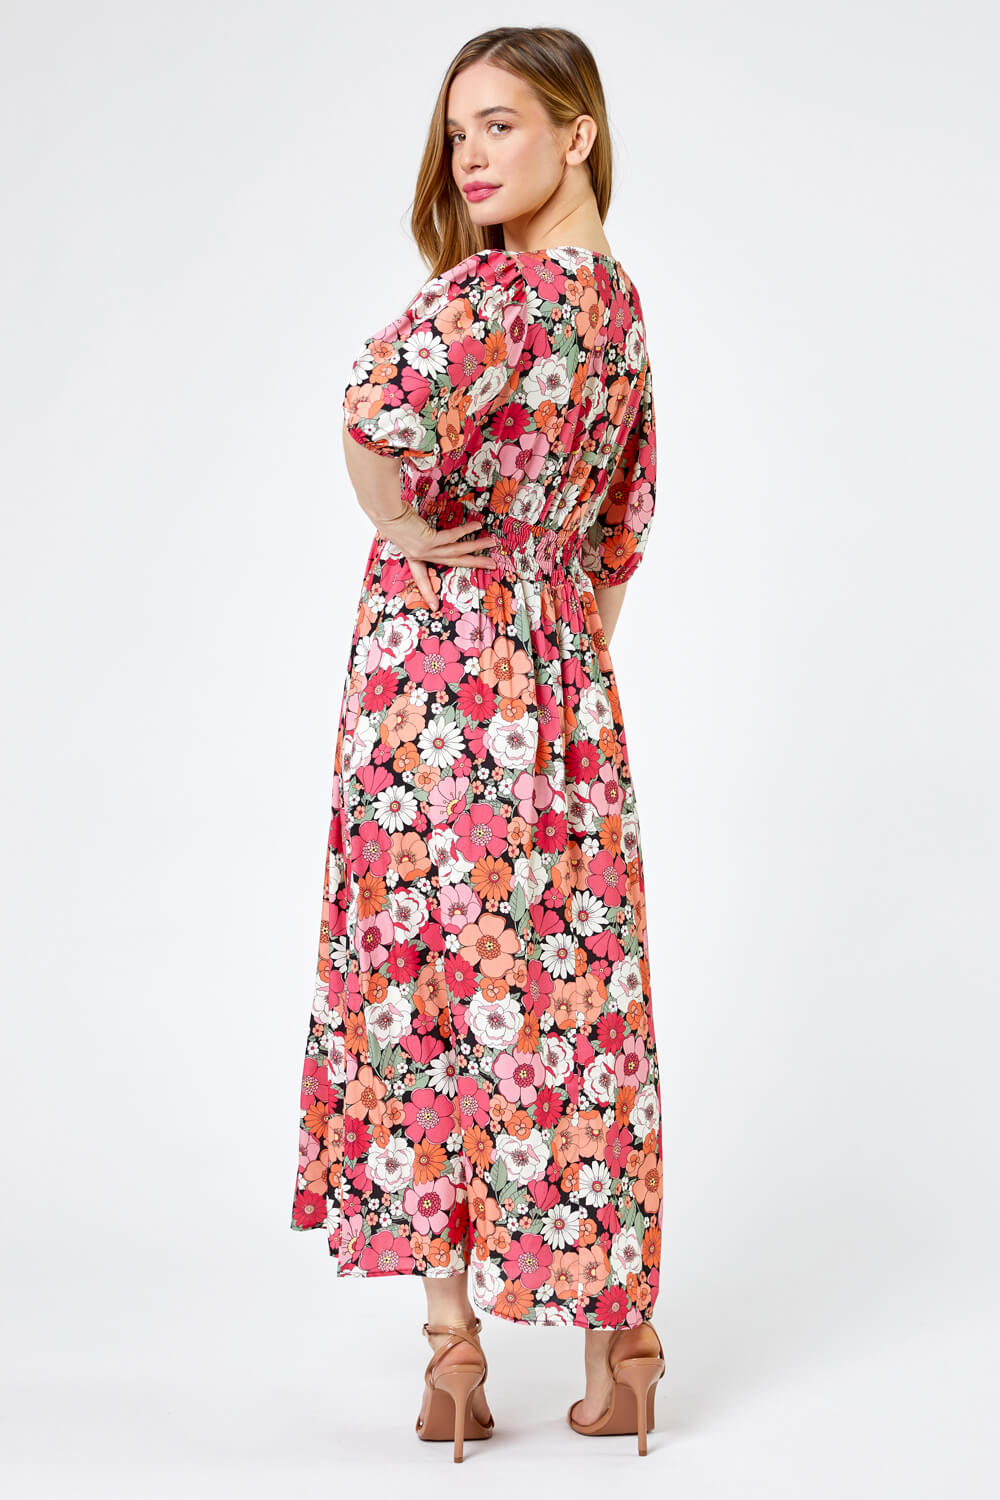 CORAL Petite Retro Floral Print Midi Dress, Image 2 of 4